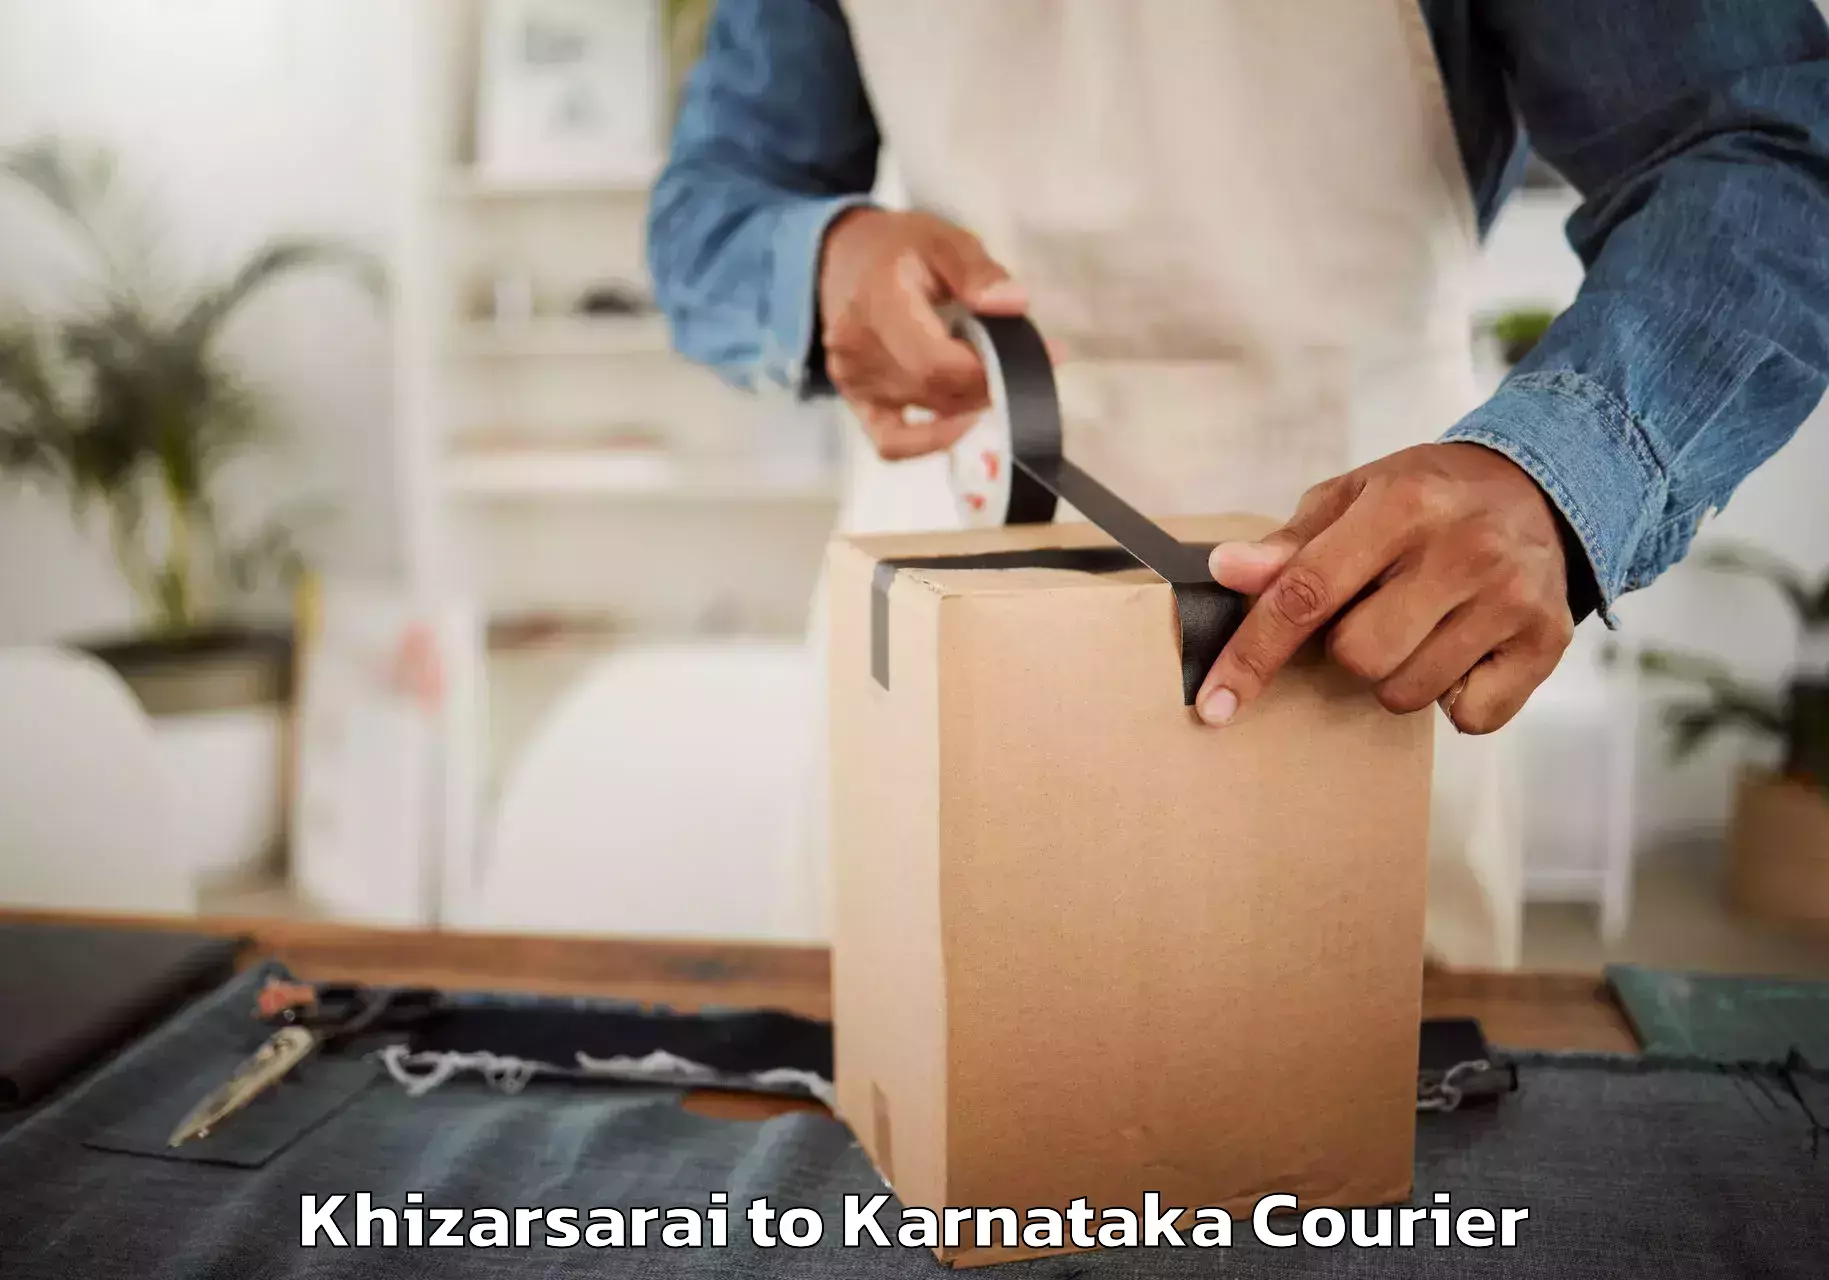 Furniture delivery service Khizarsarai to Bangarapet